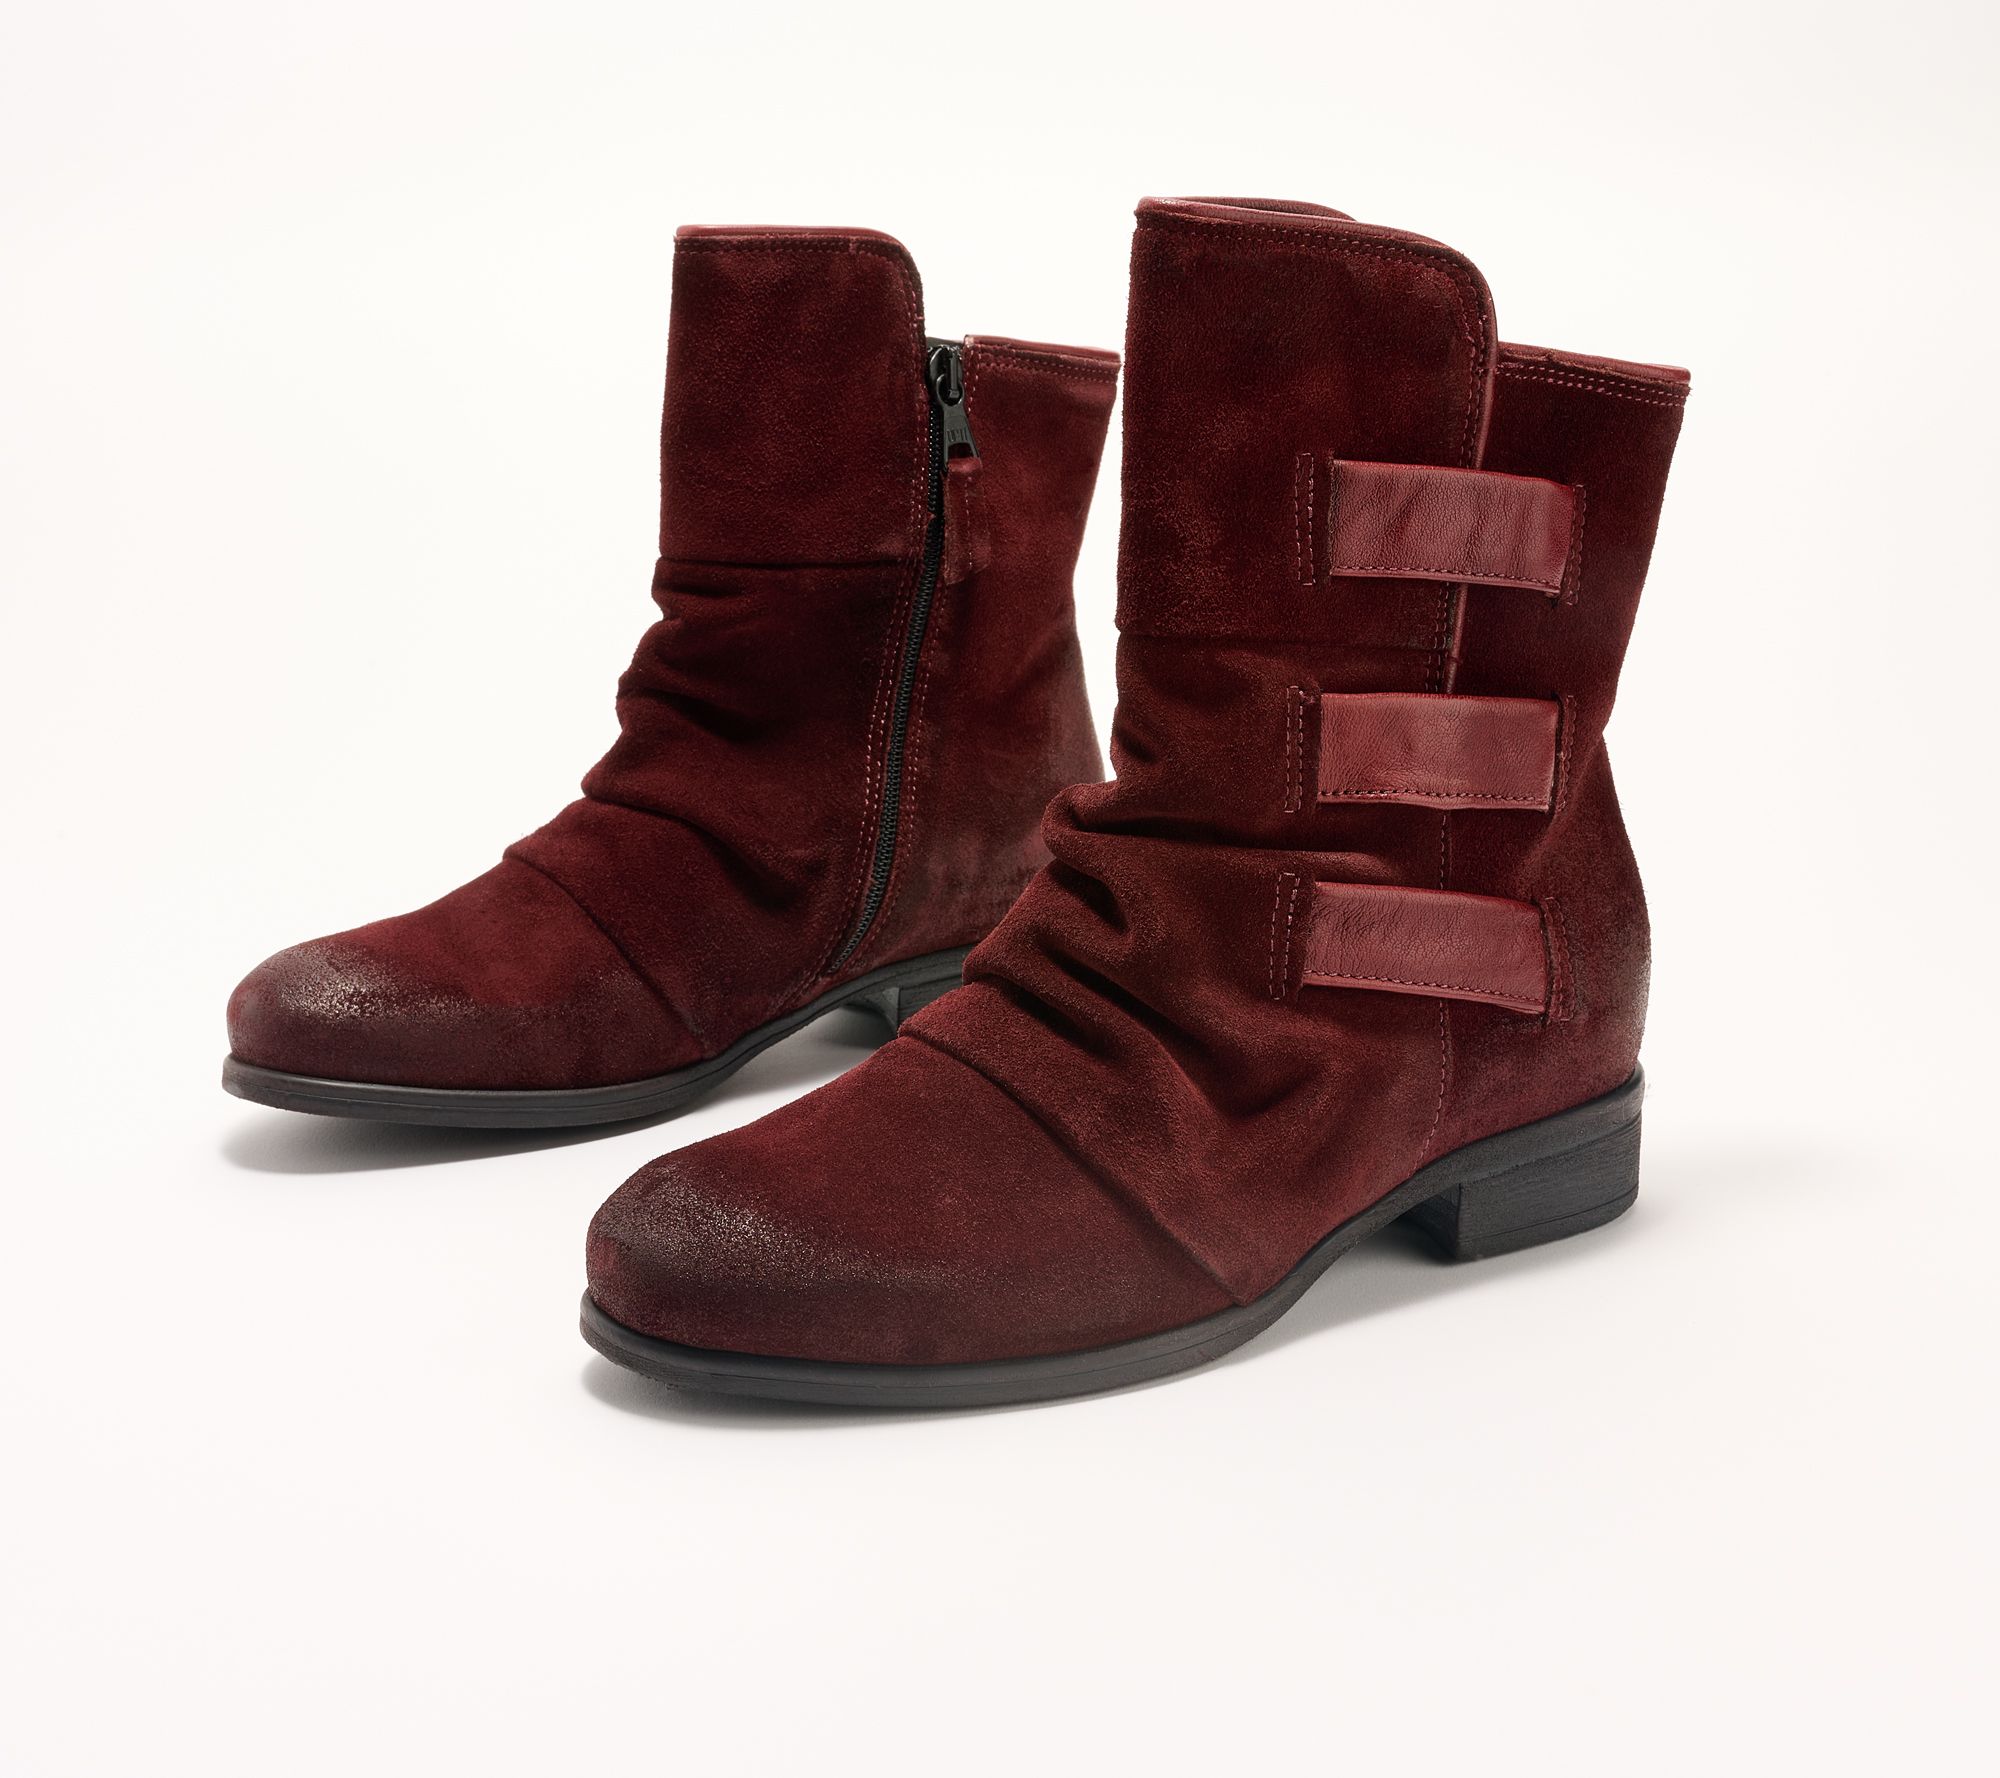 Miz Mooz Leather Triple Strap Ankle Boots - Shawn - QVC.com